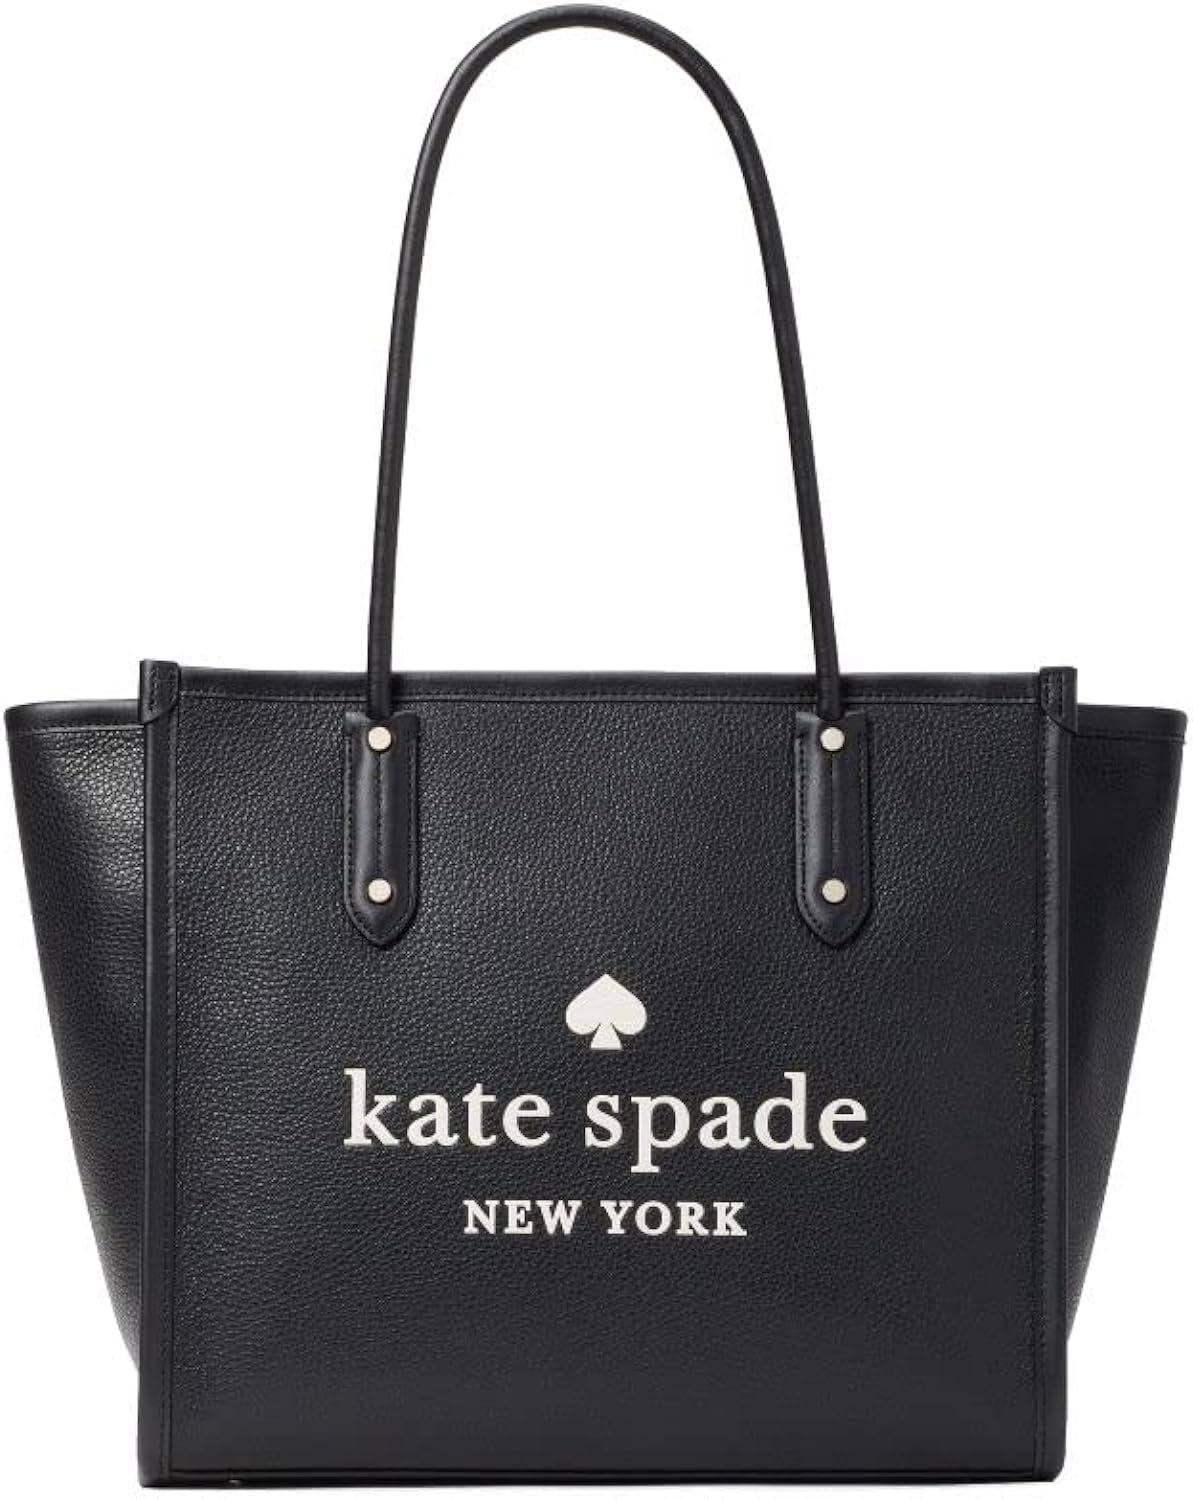 kate spade handbag for women Ella tote in leather